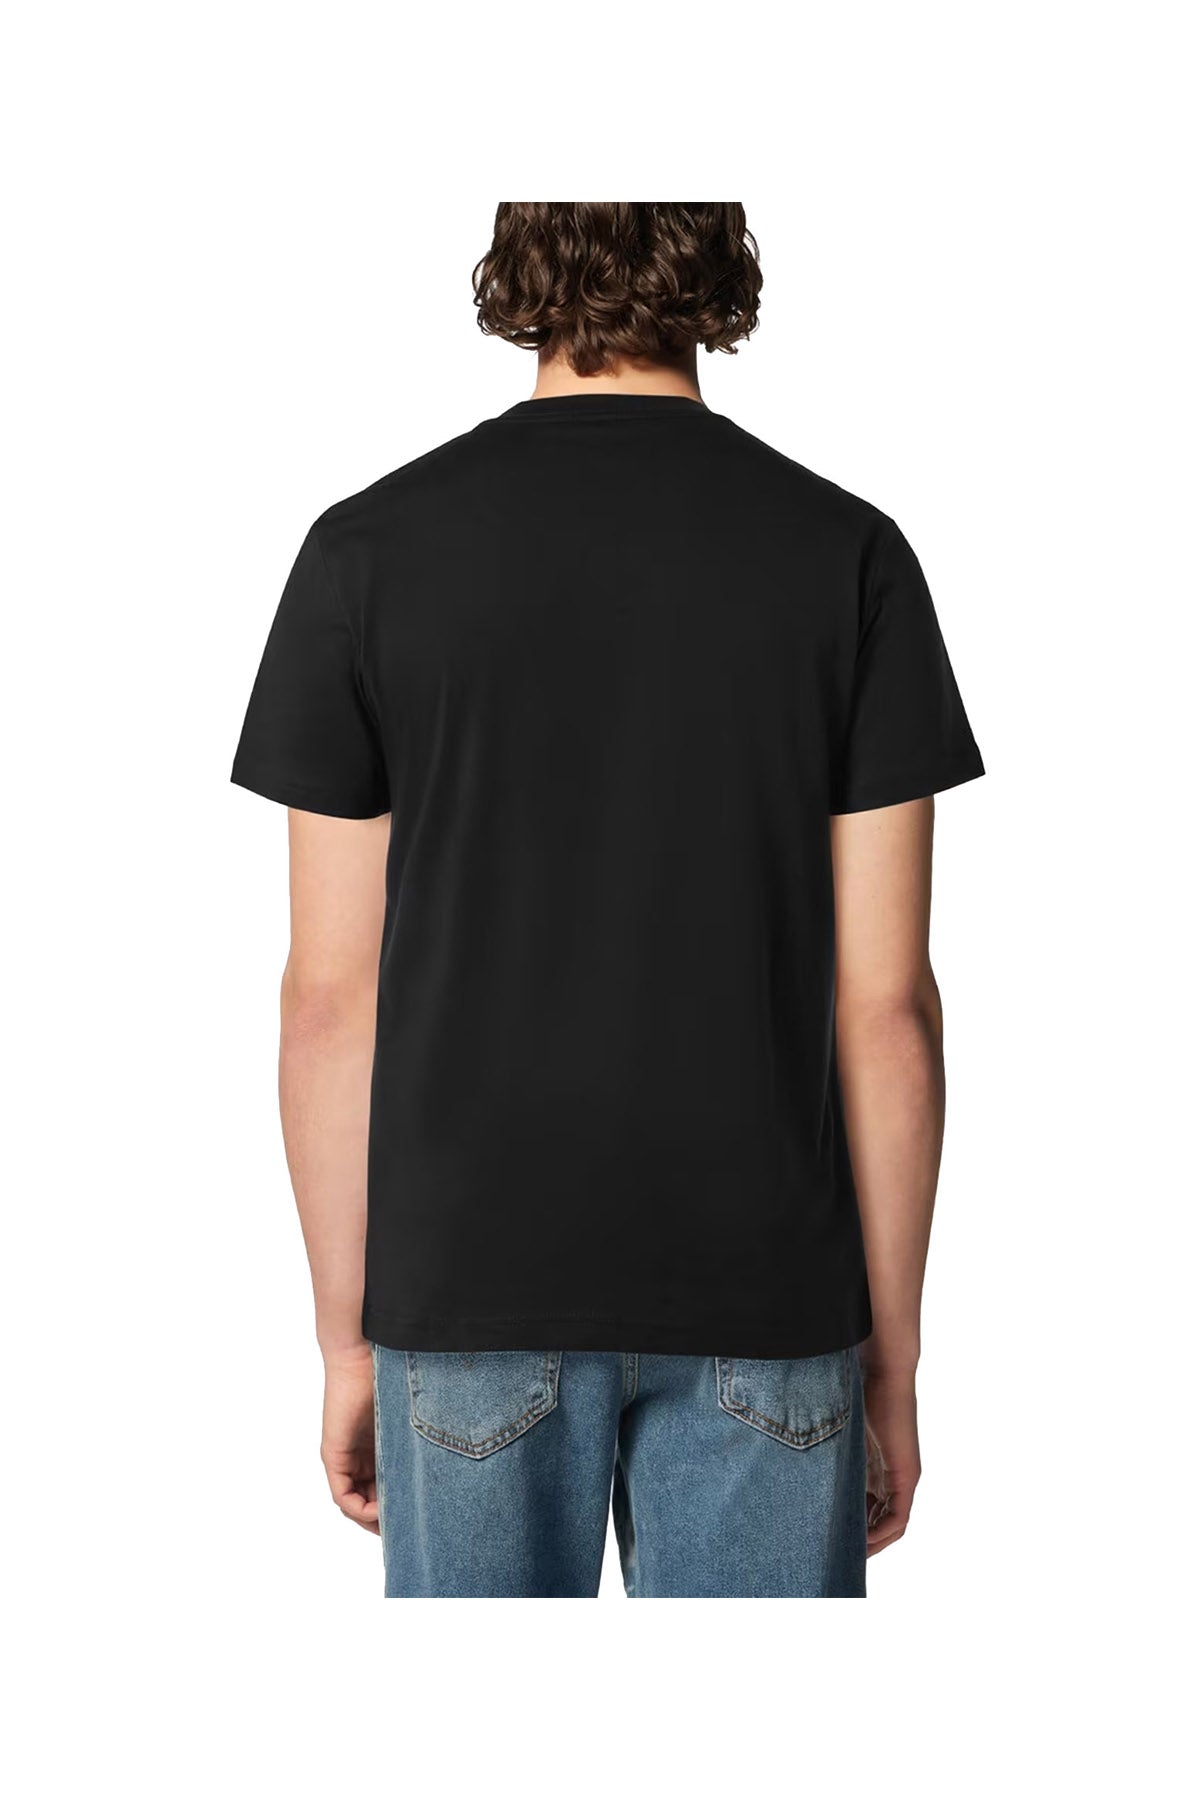 VERSACE JEANS COUTURE T-Shirt Uomo Logo Frontale Nero Nero/oro